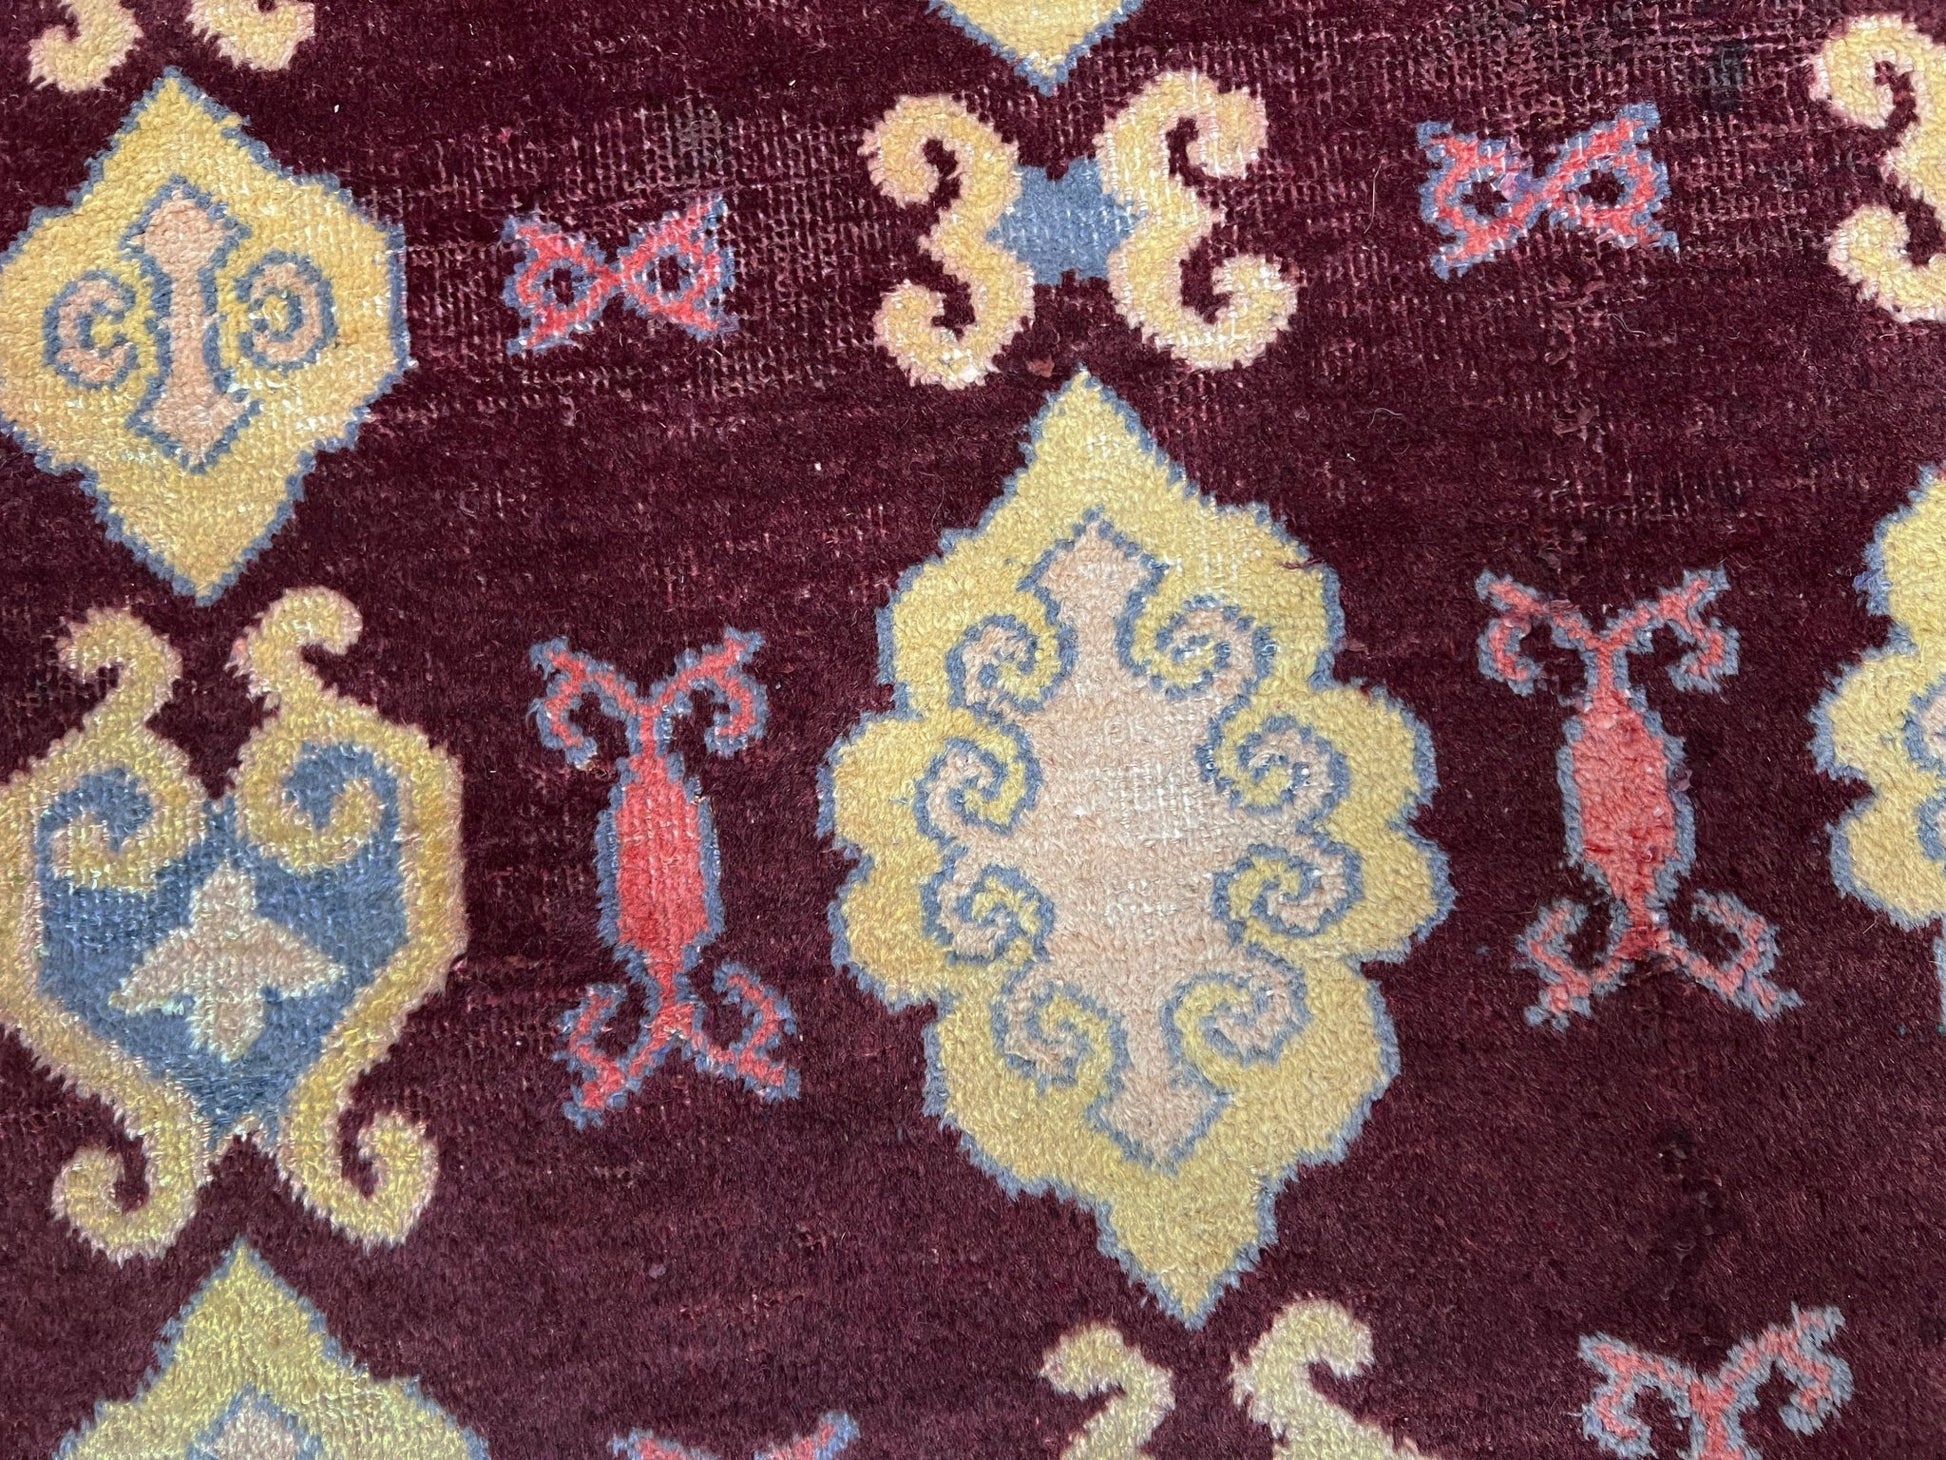 Small wool Rug for living room bedroom study dining. Vintage rug shop san francisco bay area. Buy handmade rug online